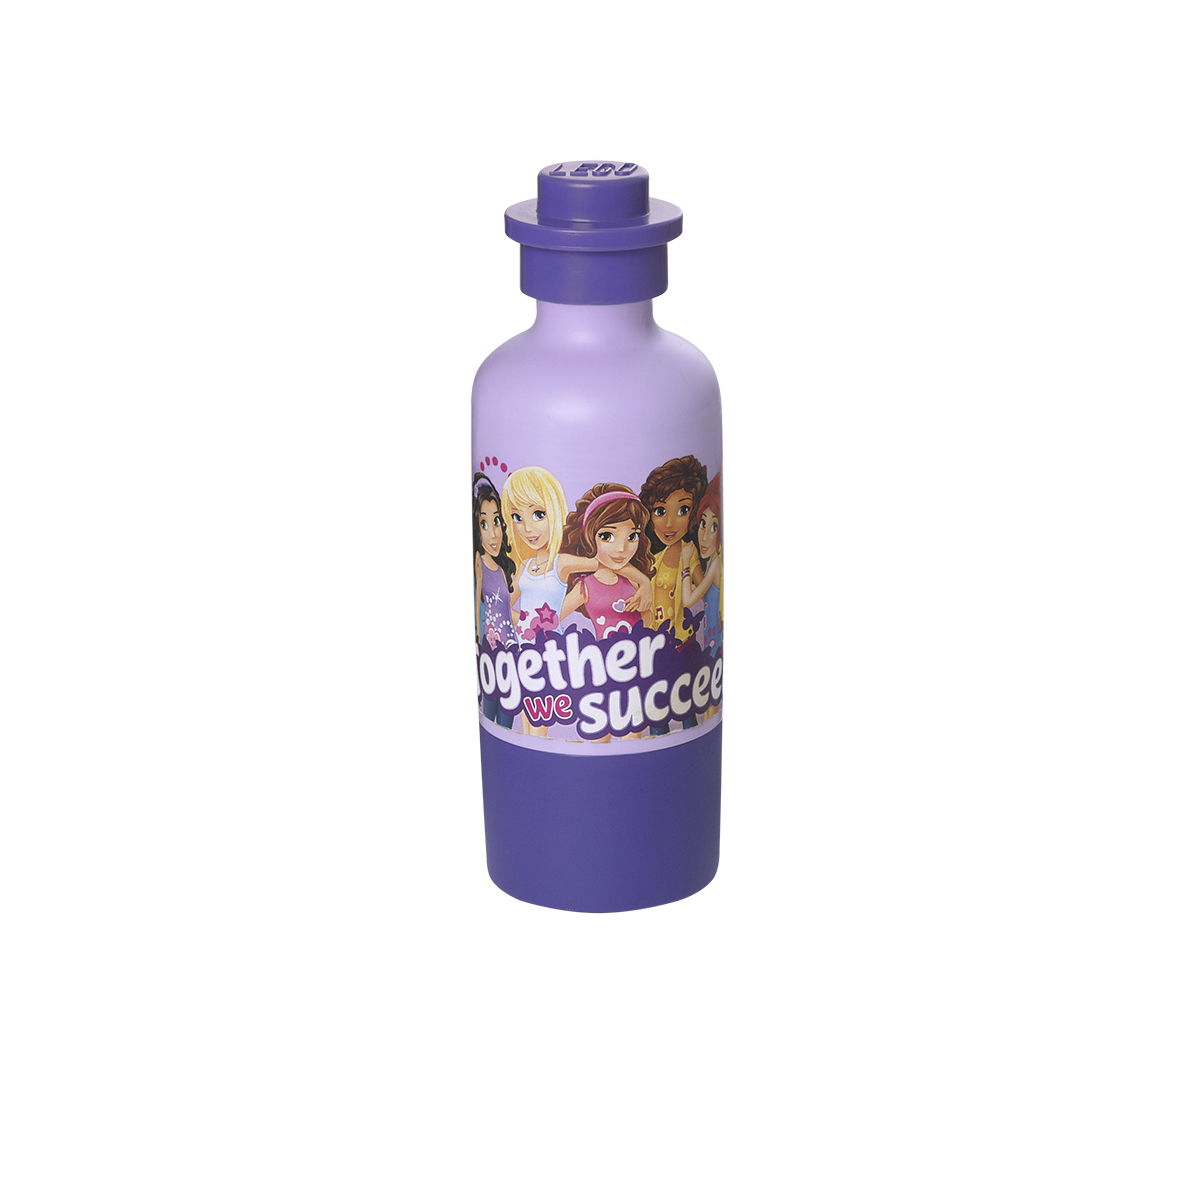 LEGO® Friends Trinkflasche in Lavendel